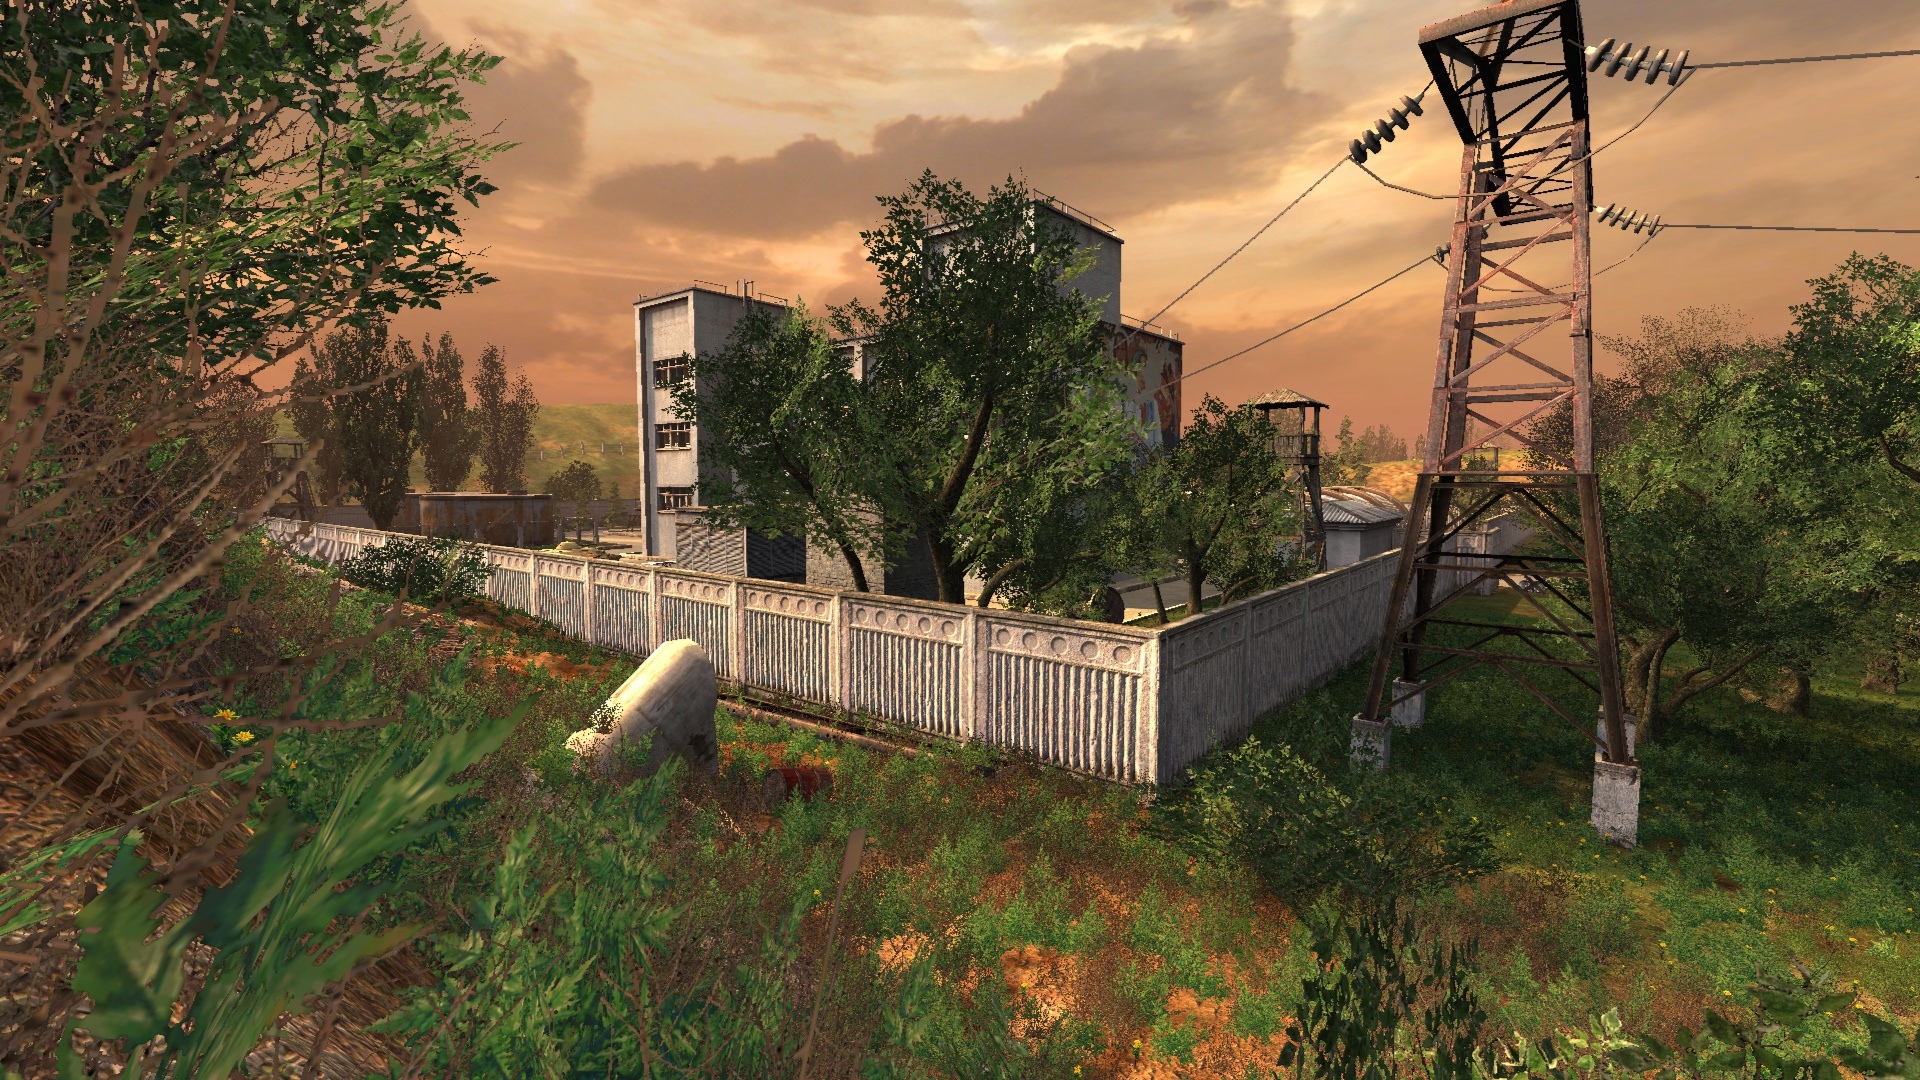 S.T.A.L.K.E.R.: Call of Pripyat announced, looks ominous – Destructoid